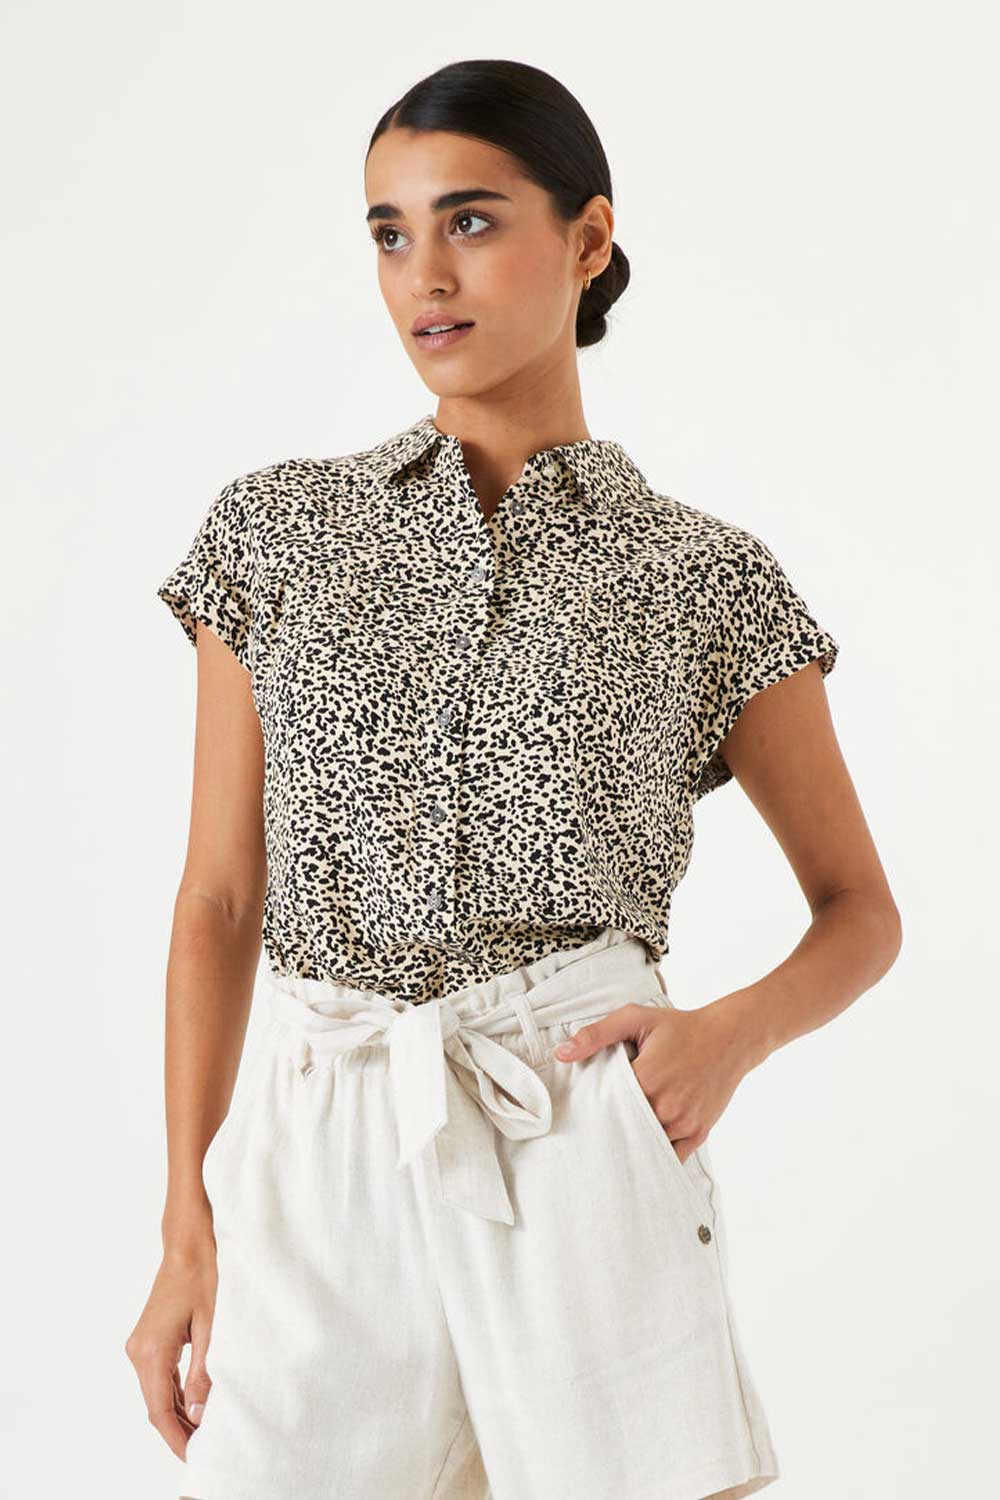 Garcia (Q40031) Women's Short Cap Sleeve Button Up Blouse with Shirt Collar in Leopard Print